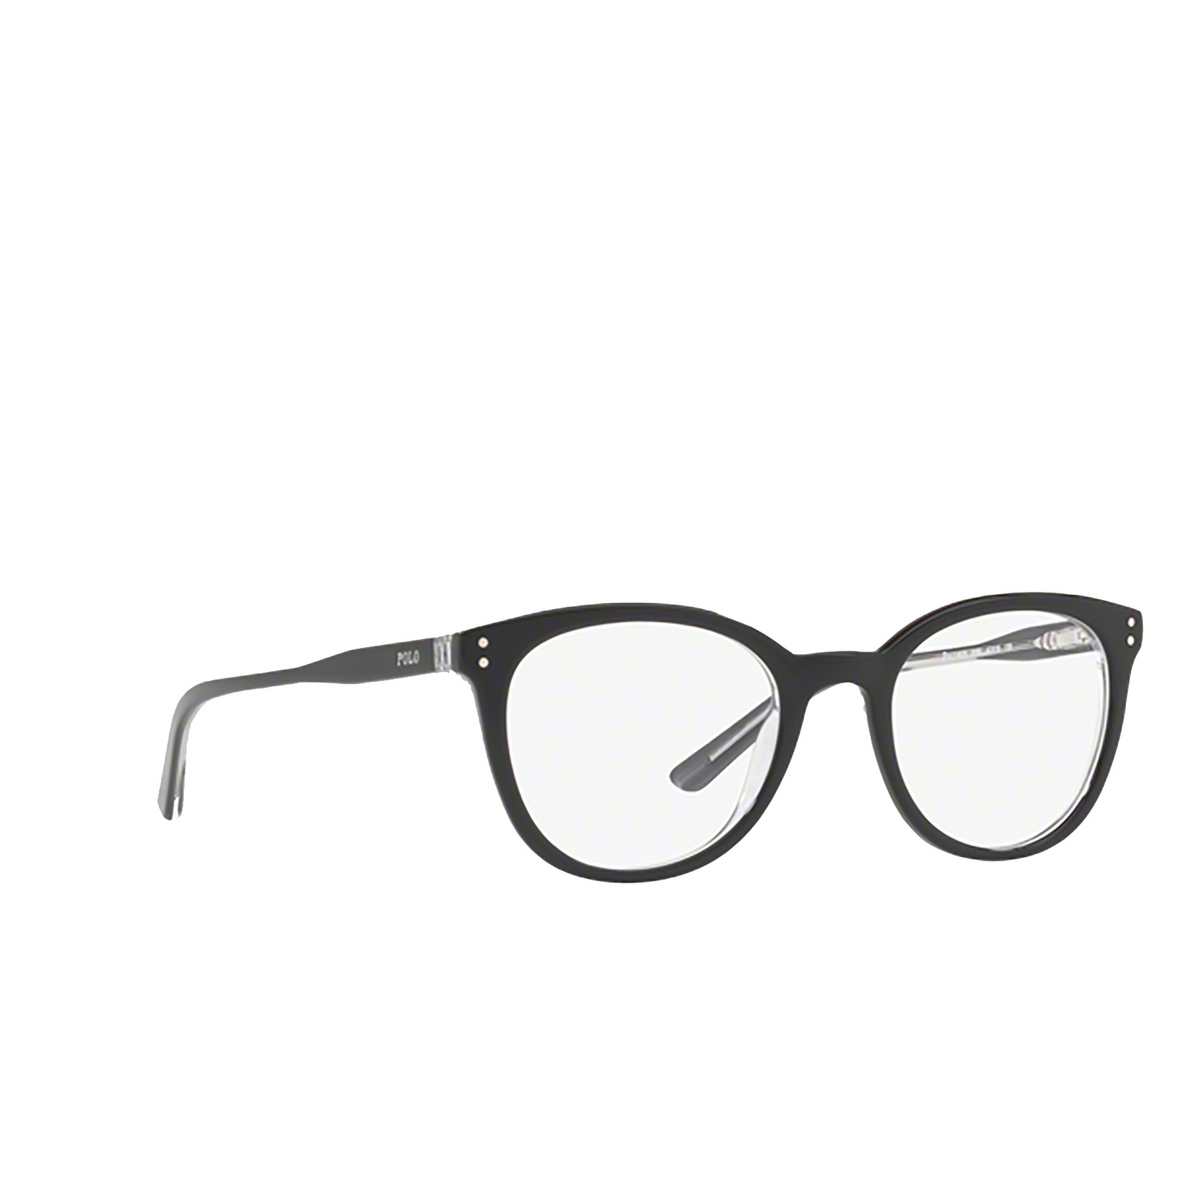 Polo Ralph Lauren® Square Eyeglasses: PP8529 color Shiny Black On Crystal 3163 - three-quarters view.